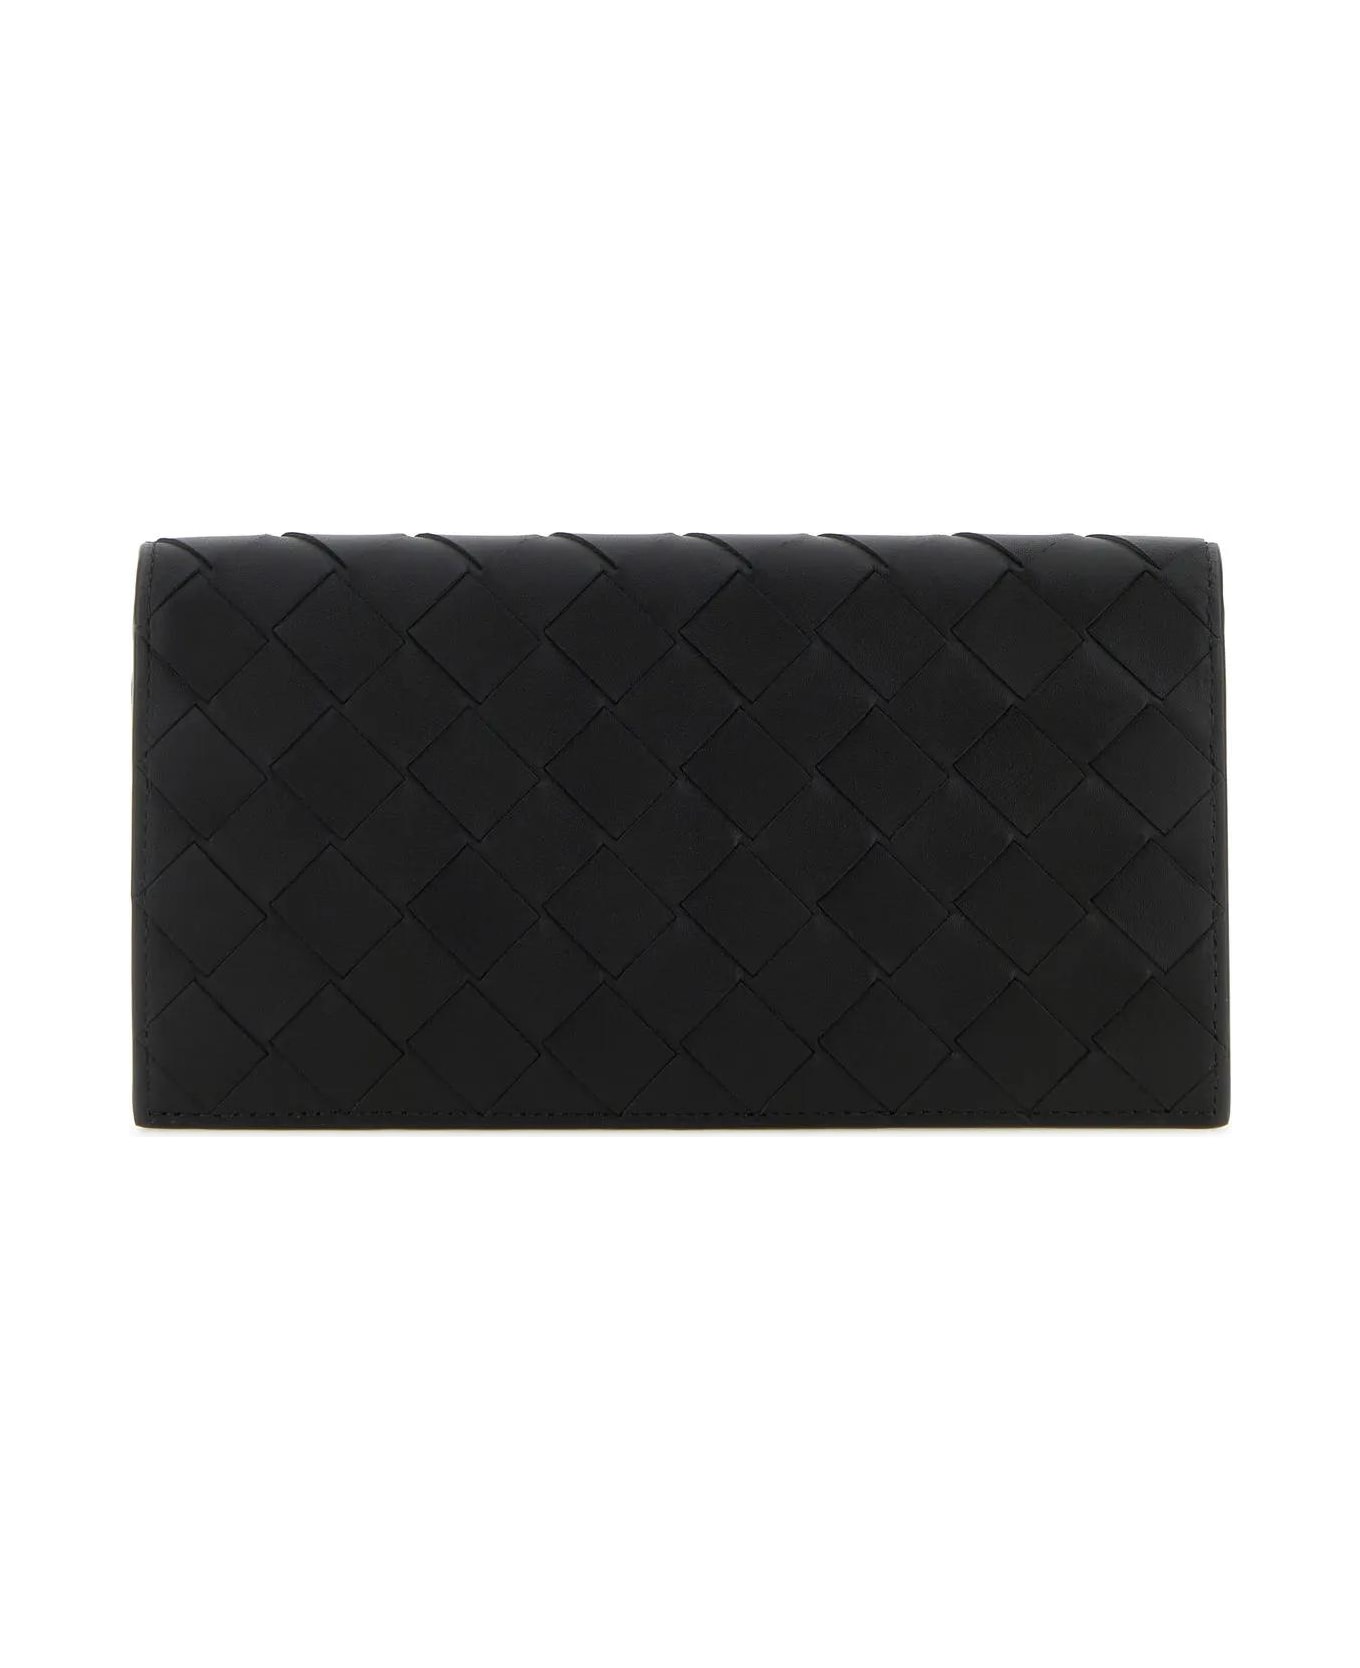 Bottega Veneta Black Leather Wallet - BLACK 財布